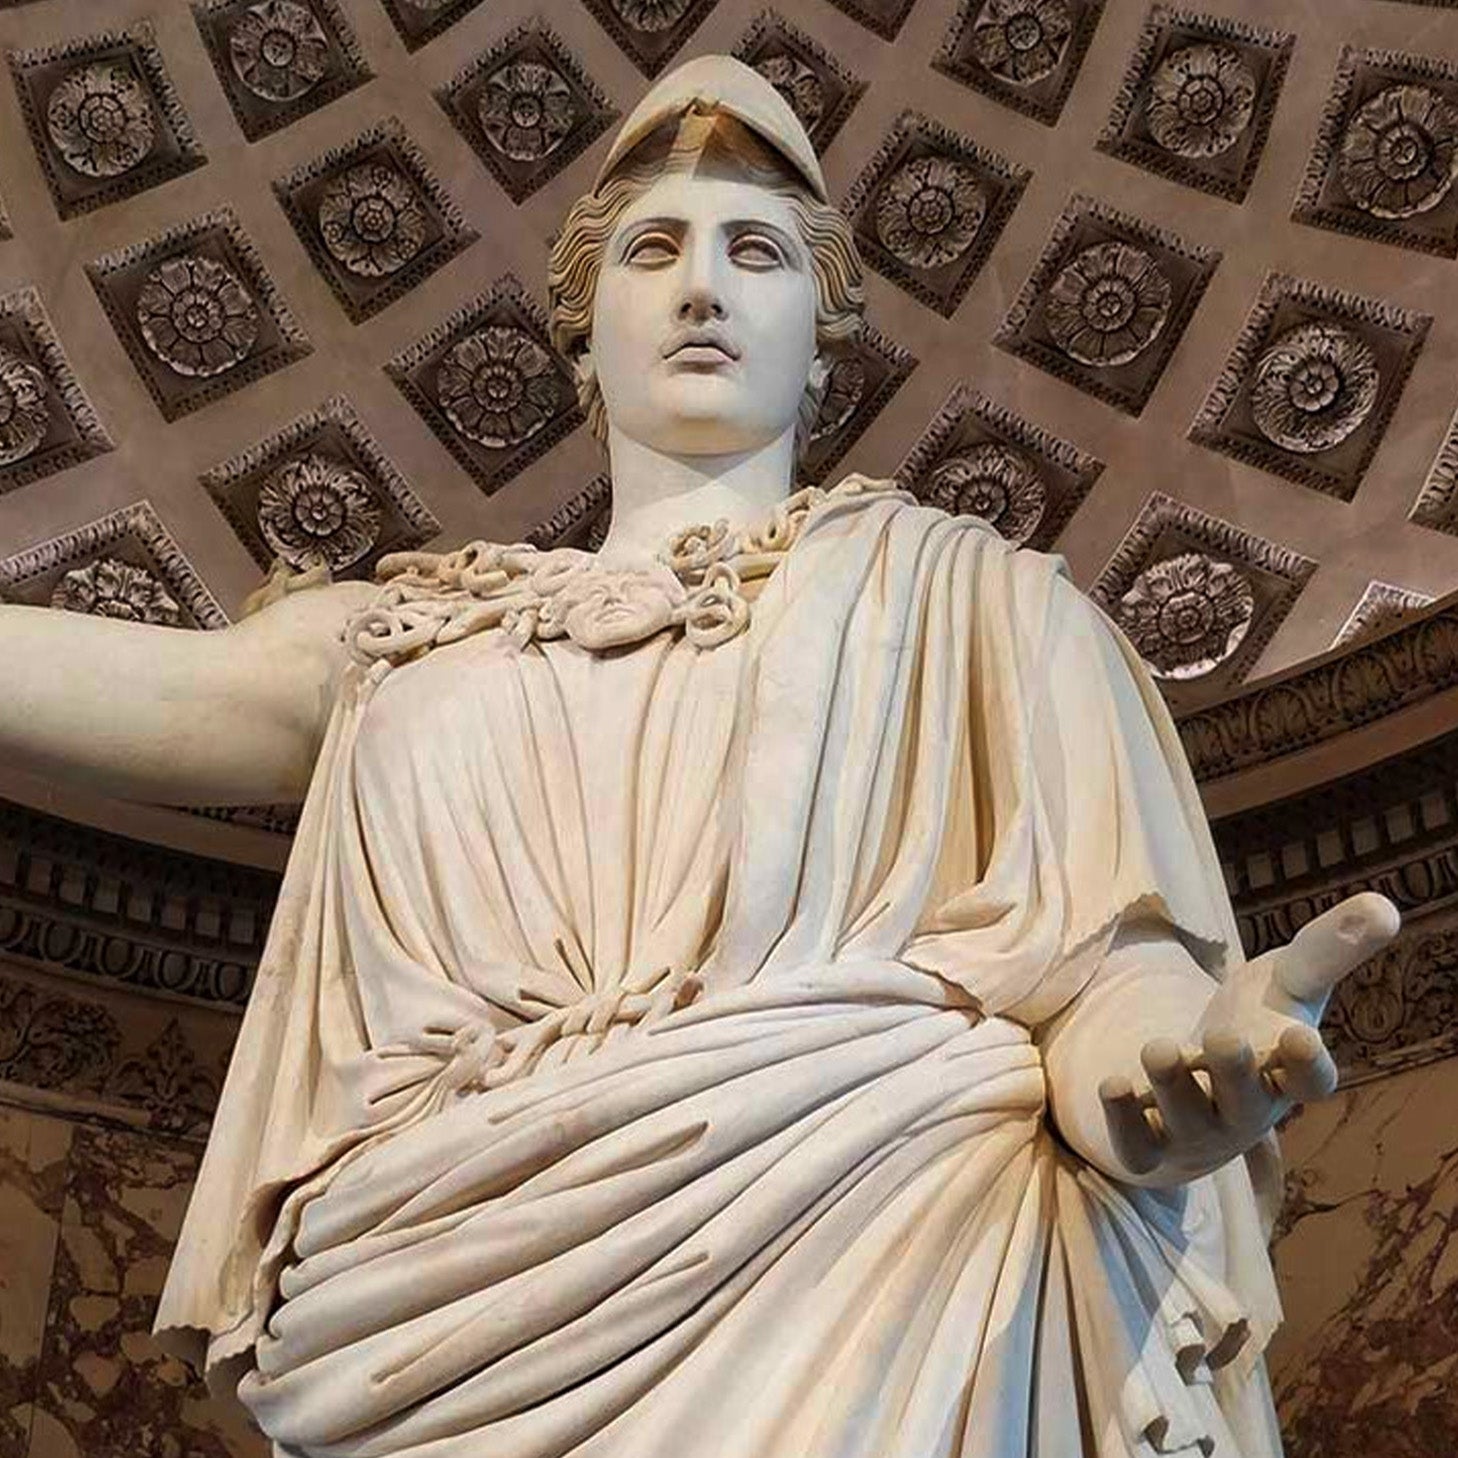 Statue de Athéna